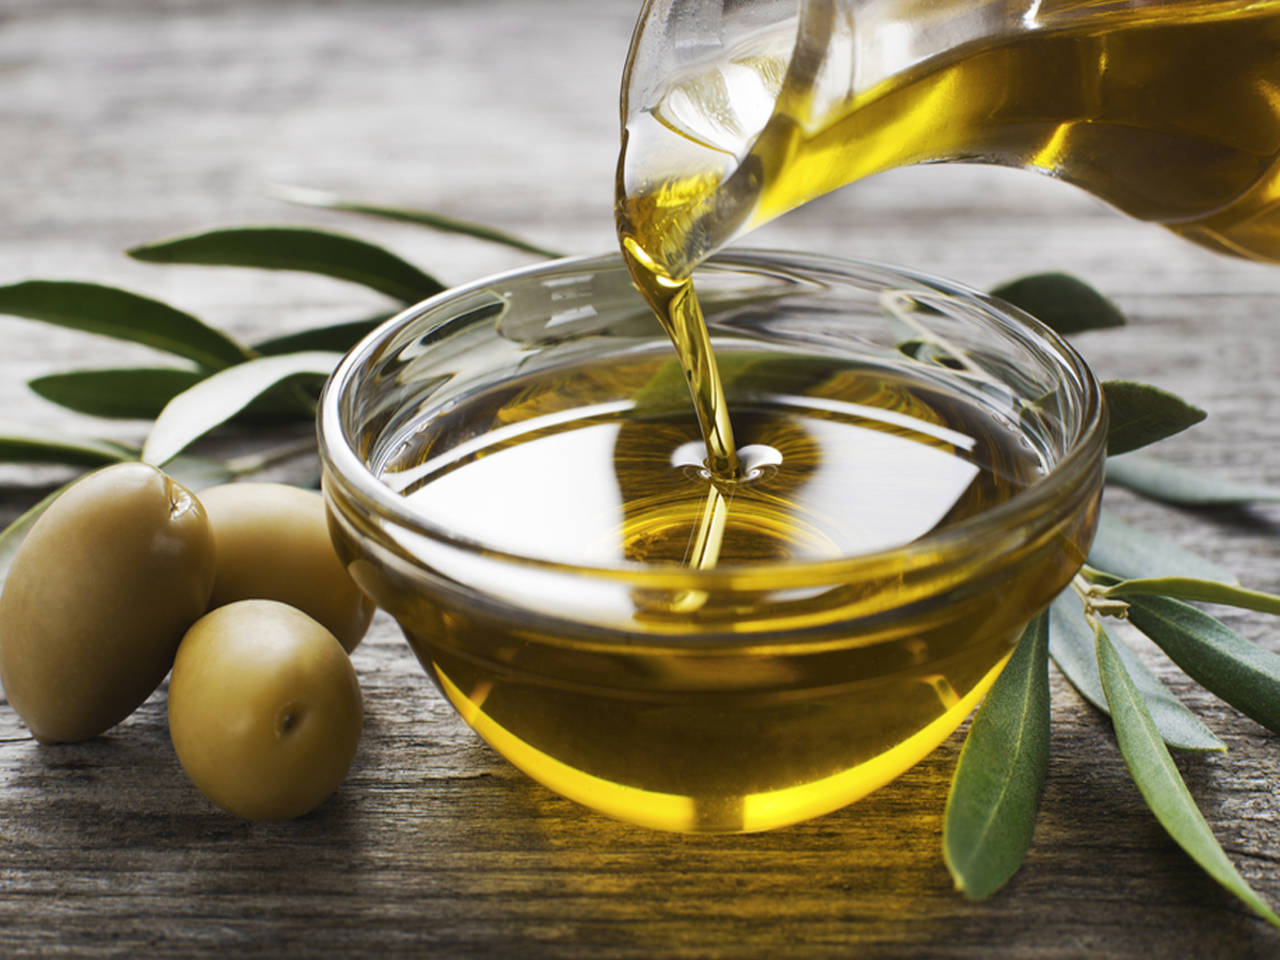 Are Olives Good for You? 9 Health Benefits of Olives & Olive Oil